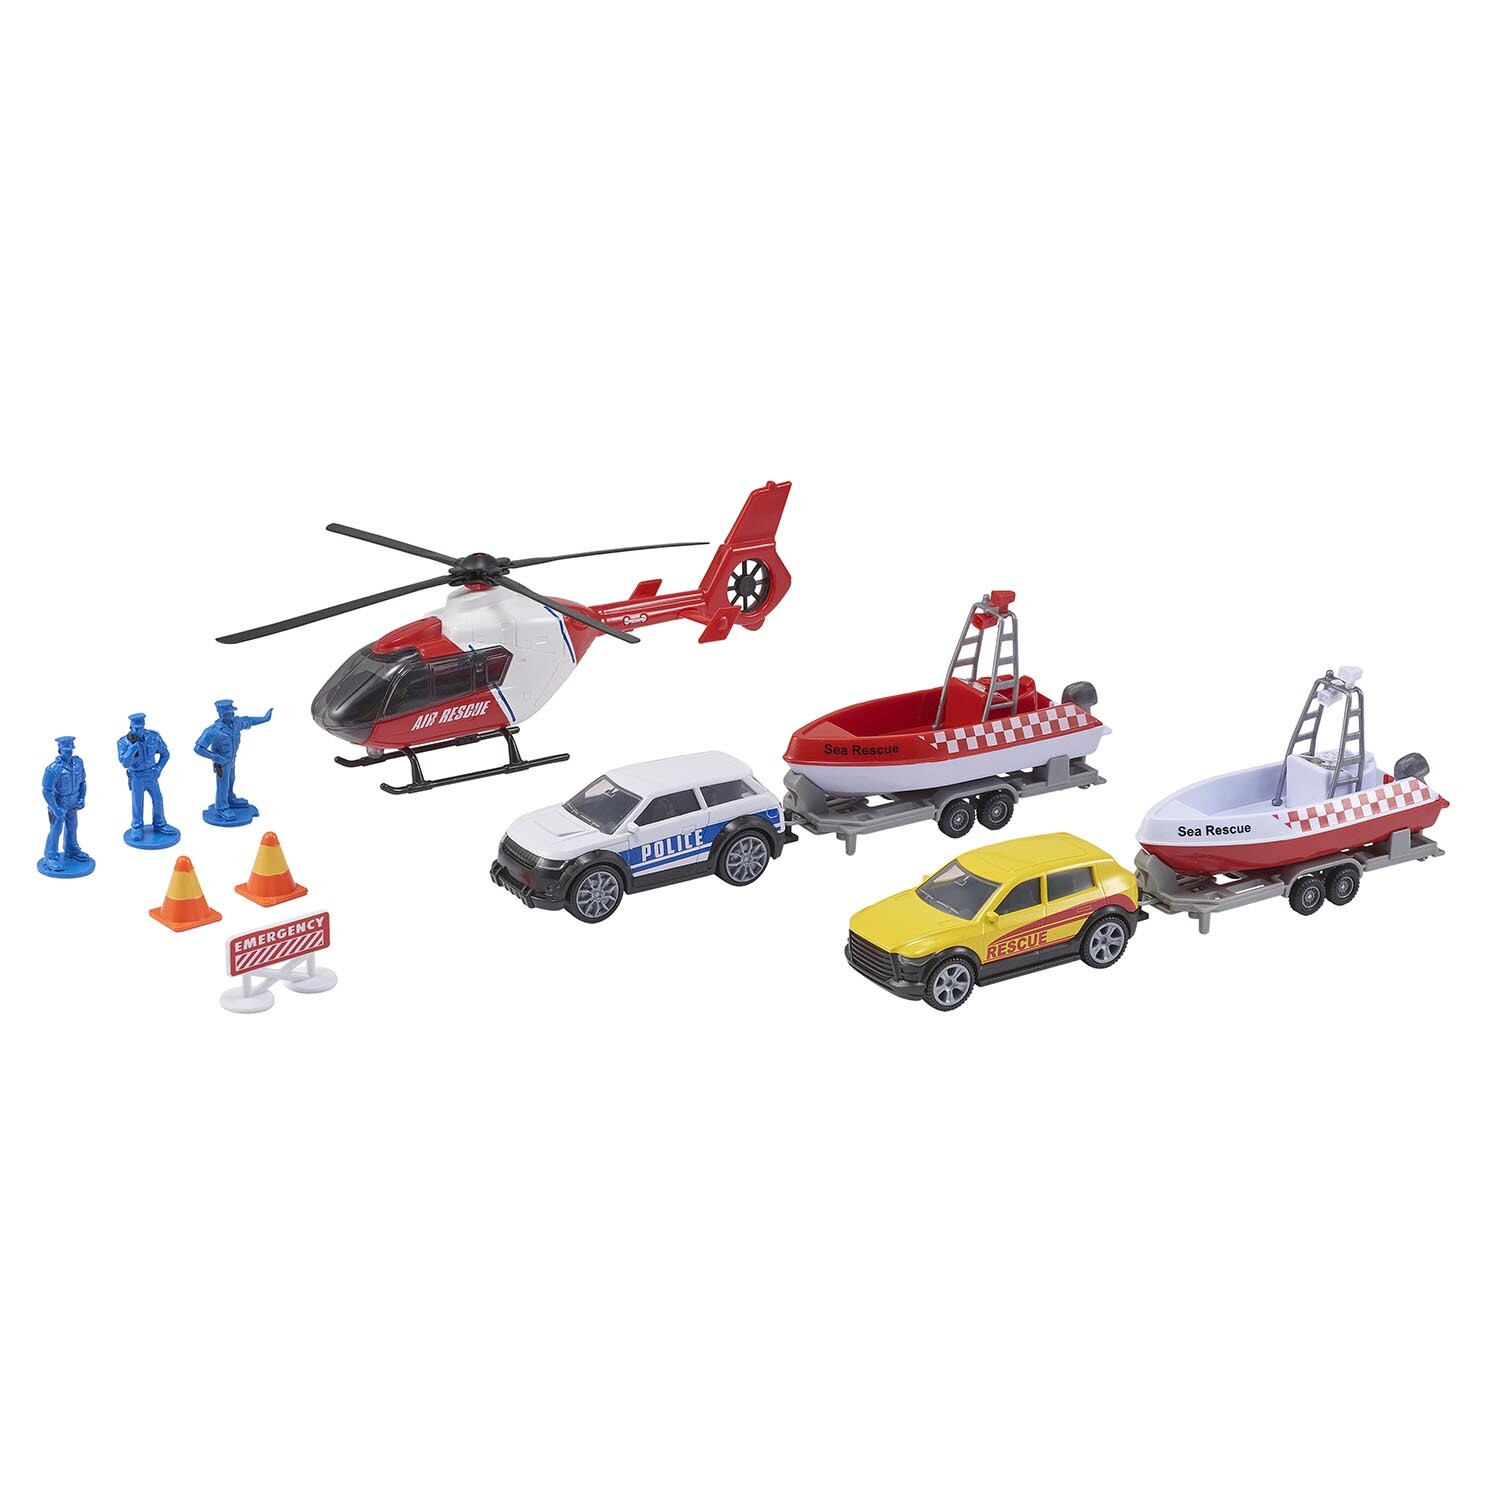 Teamsterz Street Kingz Air Sea Rescue Playset Image